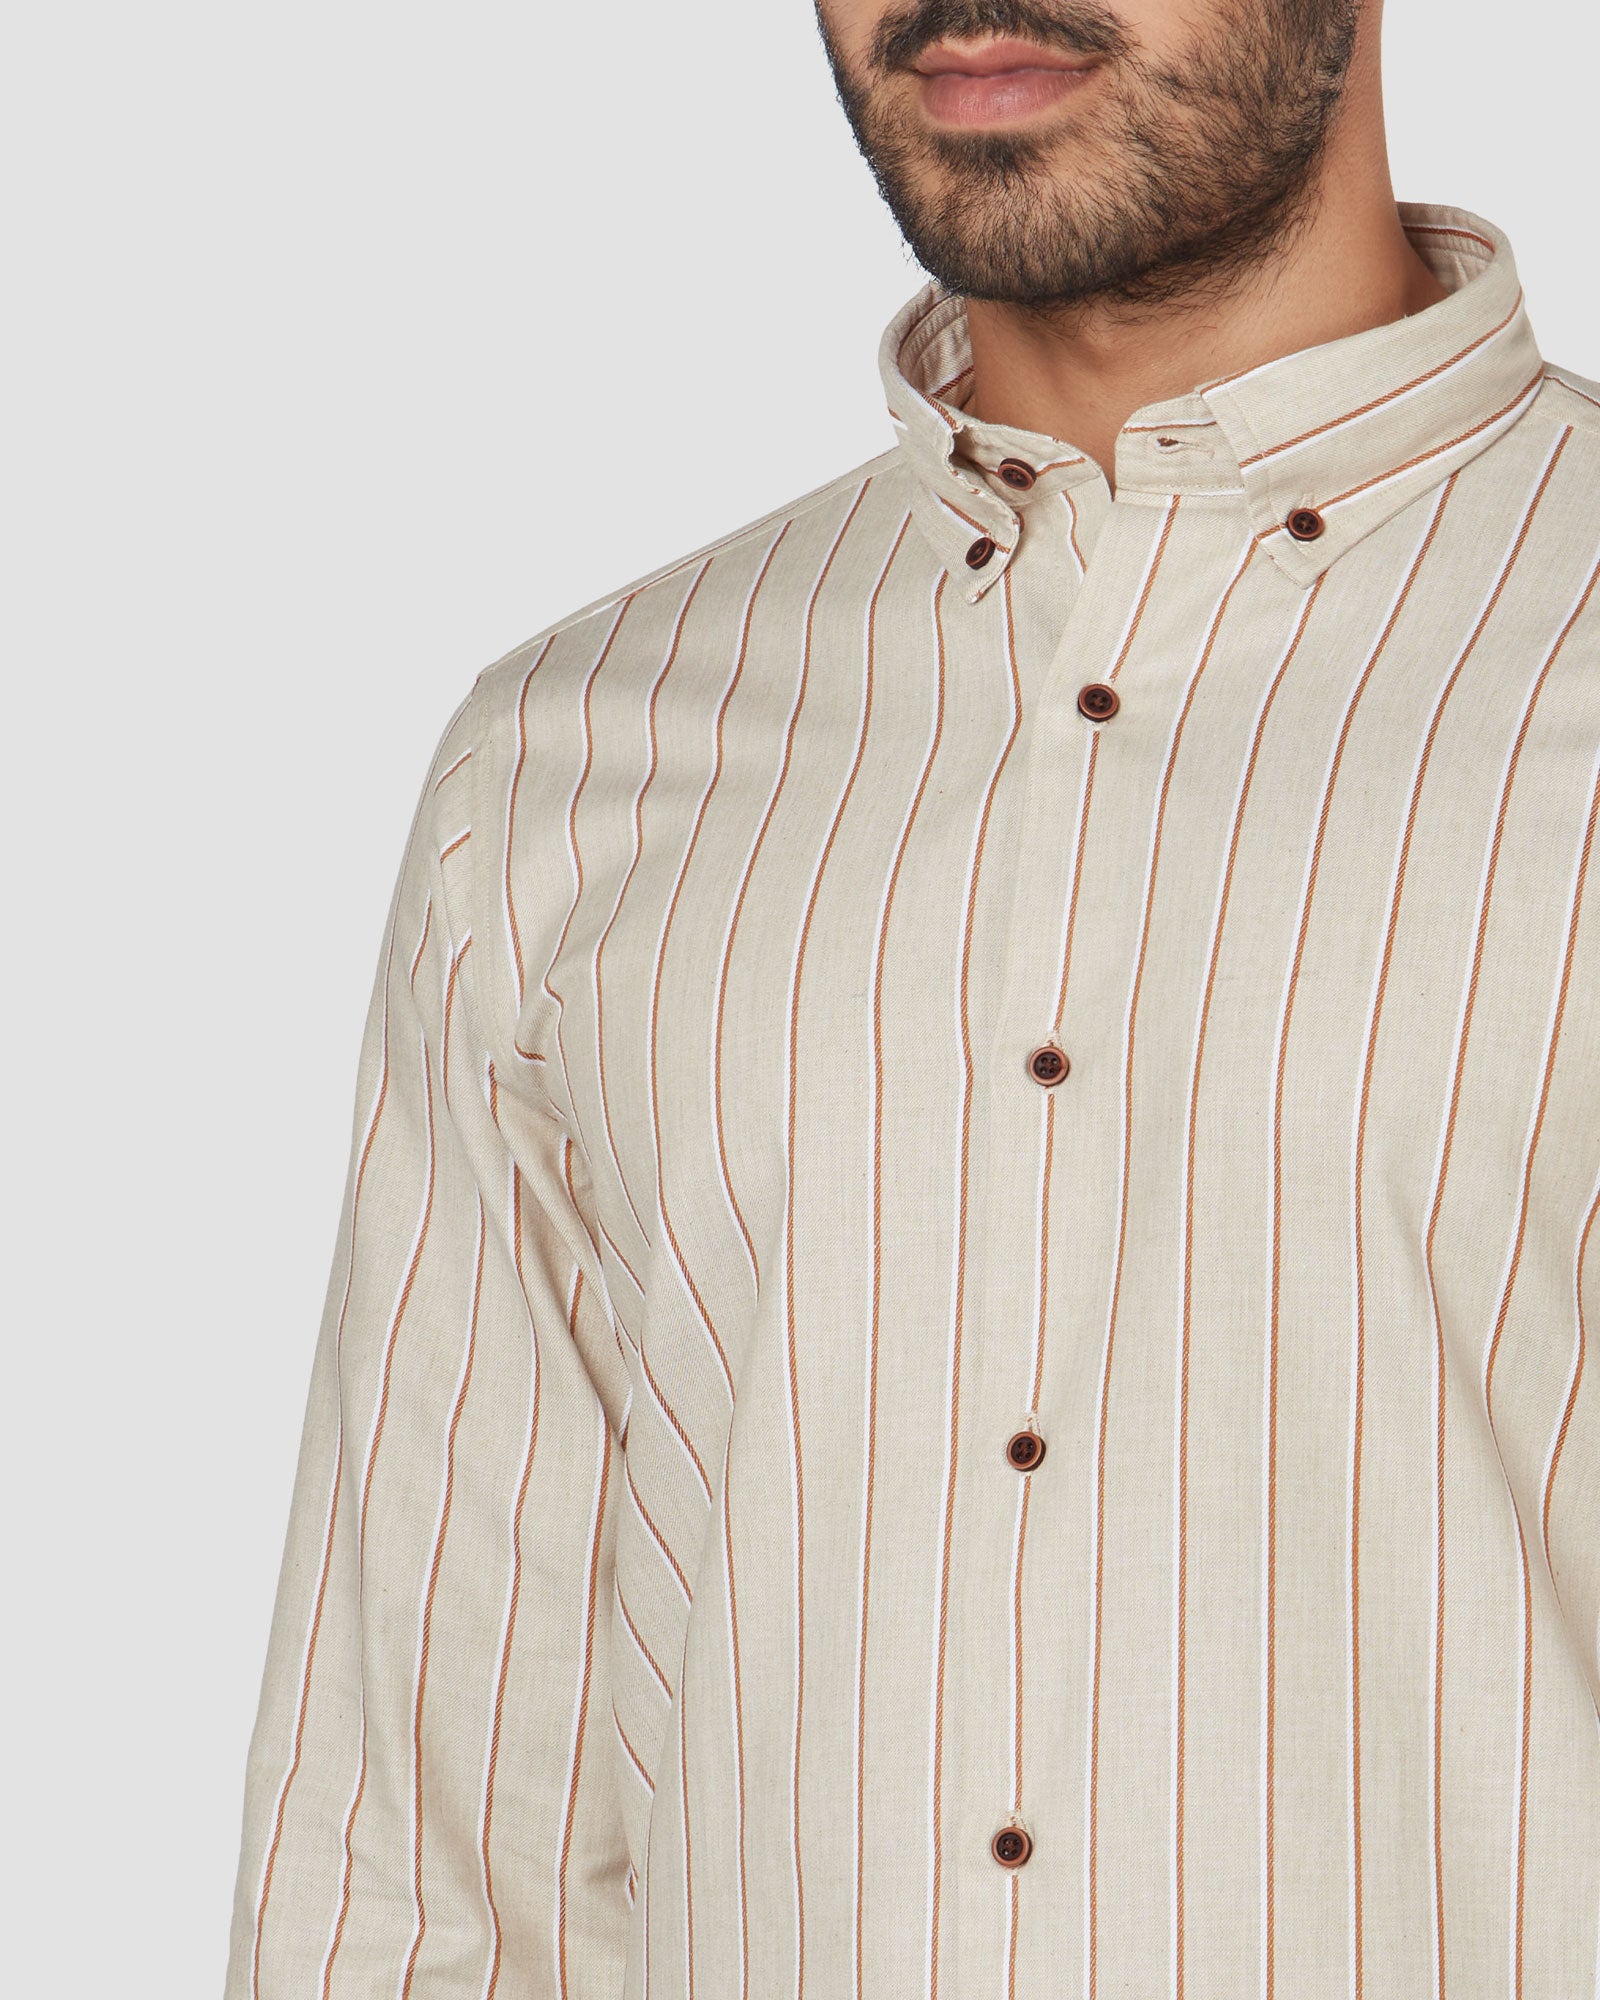 Bombay Shirt Company - Latte Time Stripes